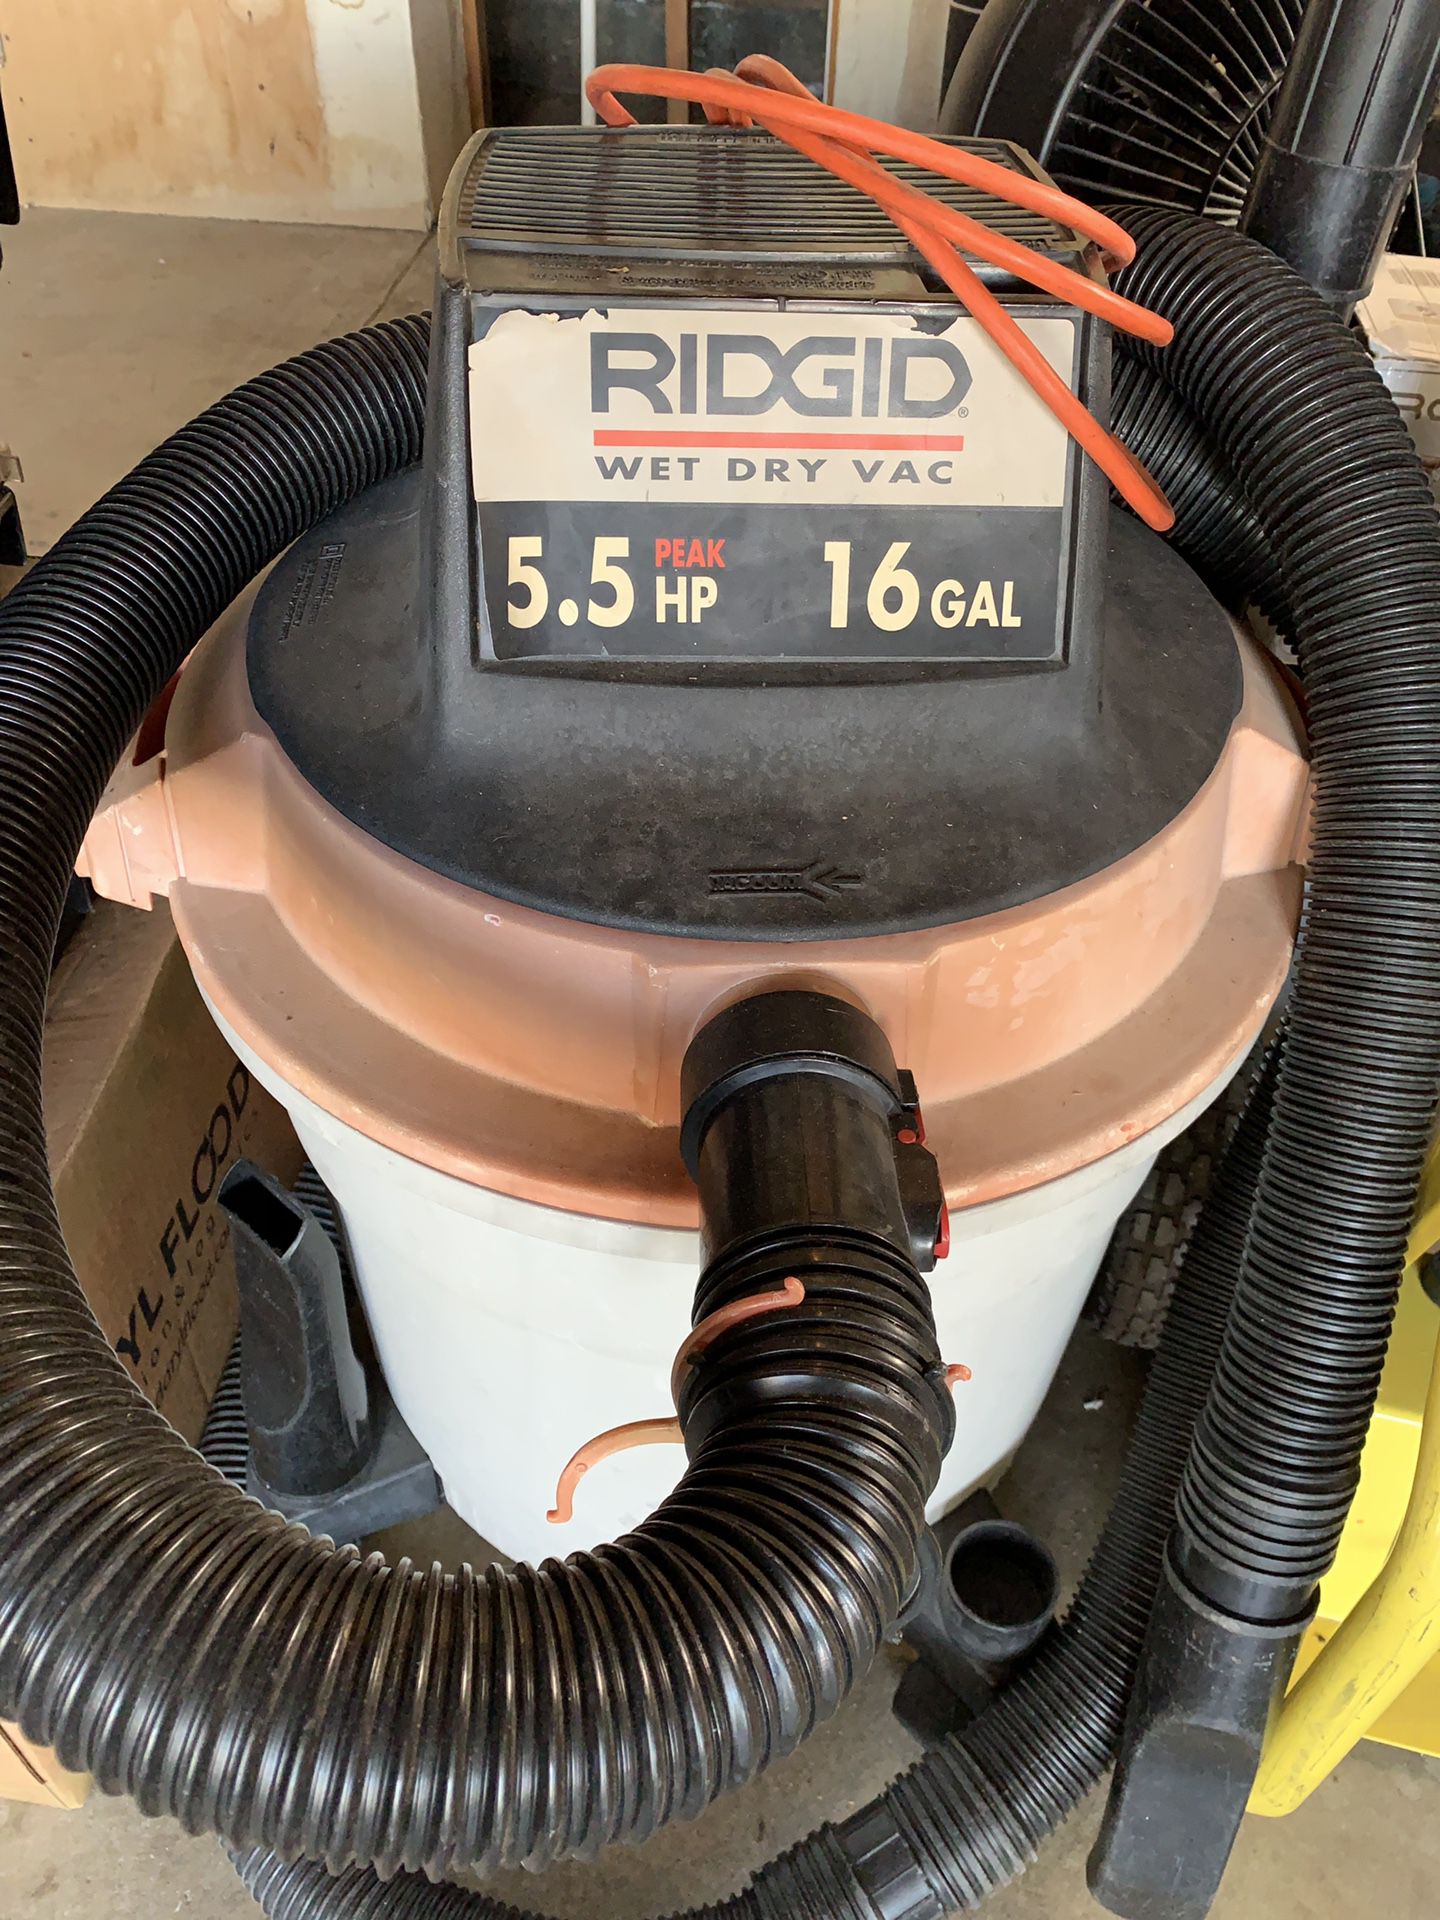 Rigid 16 gallon 5.5 HP wet dry vac.